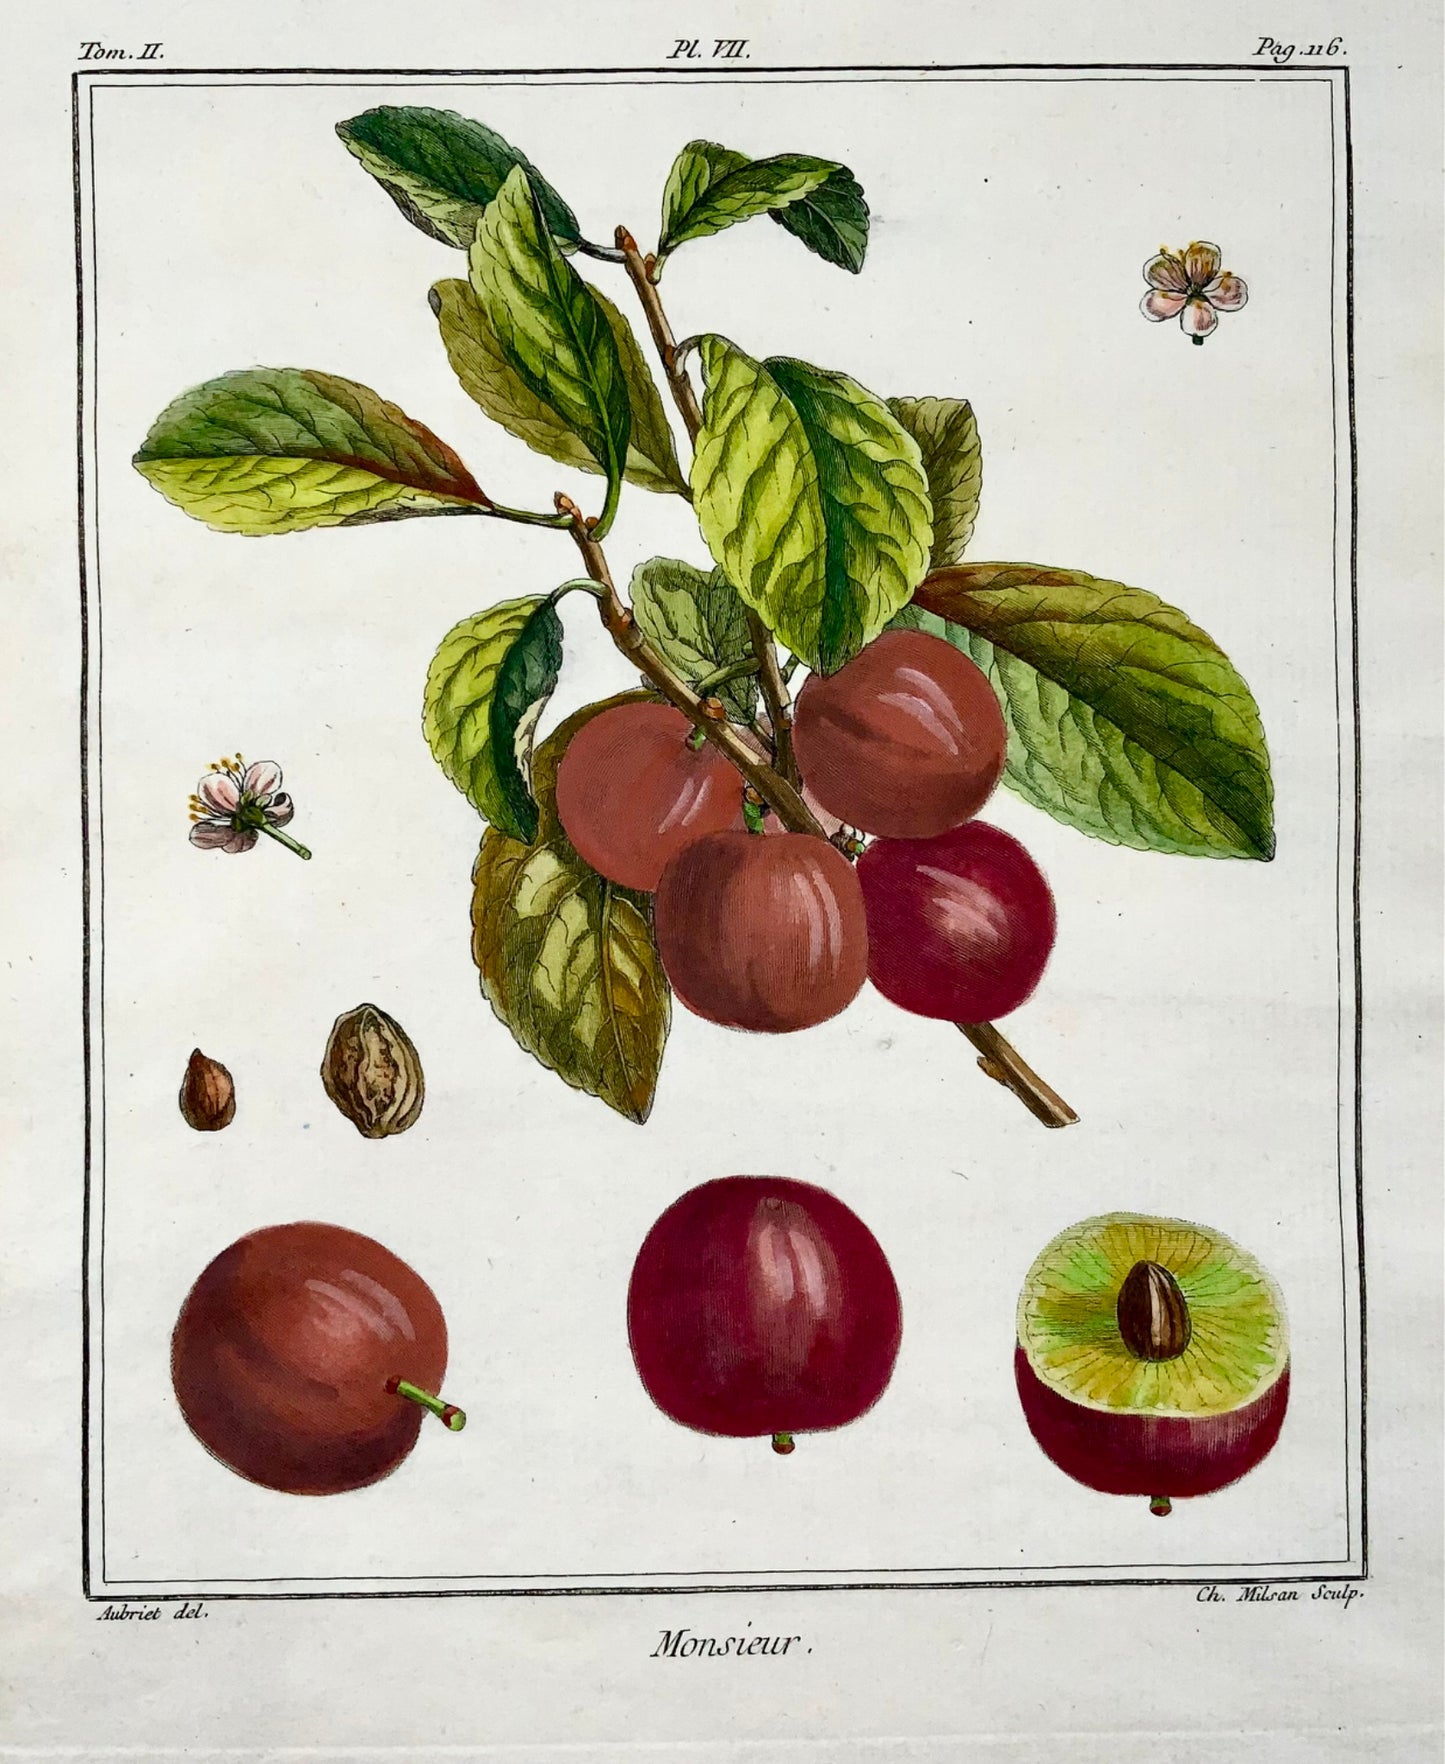 1768 Prugne, Duhamel du Monceau, grande quarto, frutta, colore a mano, 